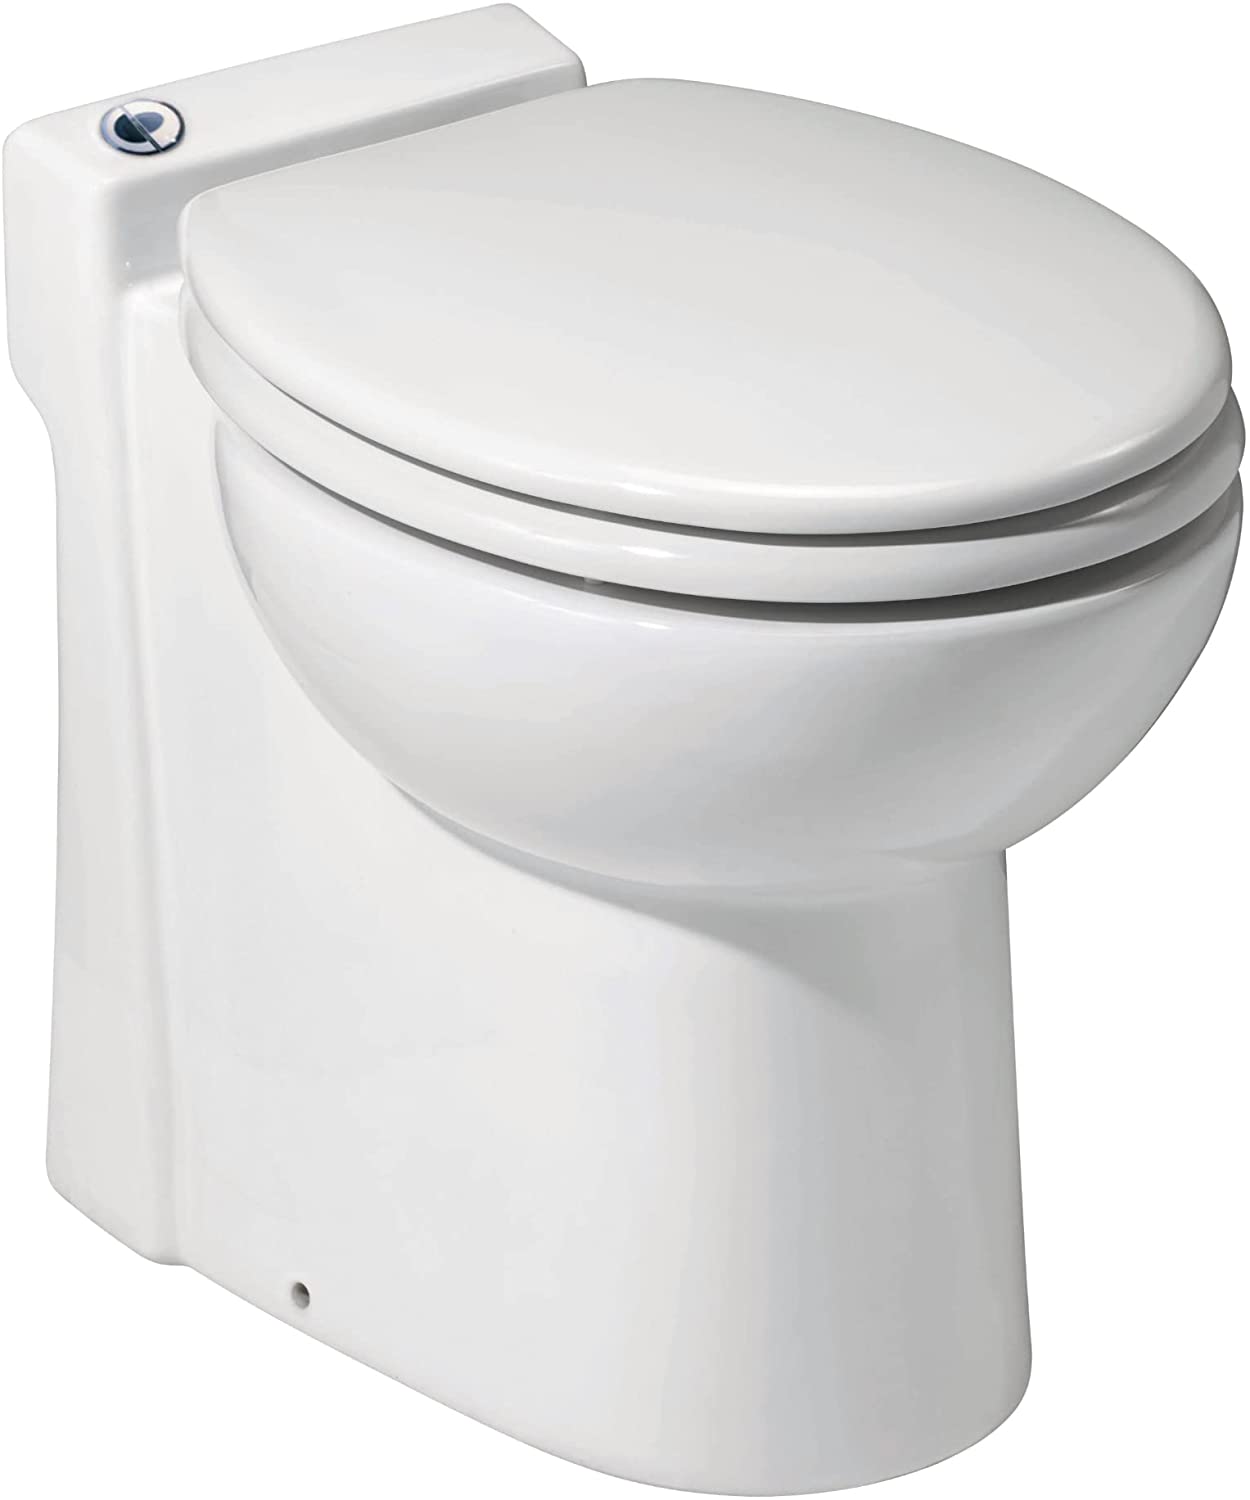 Saniflo 023 Sanicompact Self-Contained Toilet